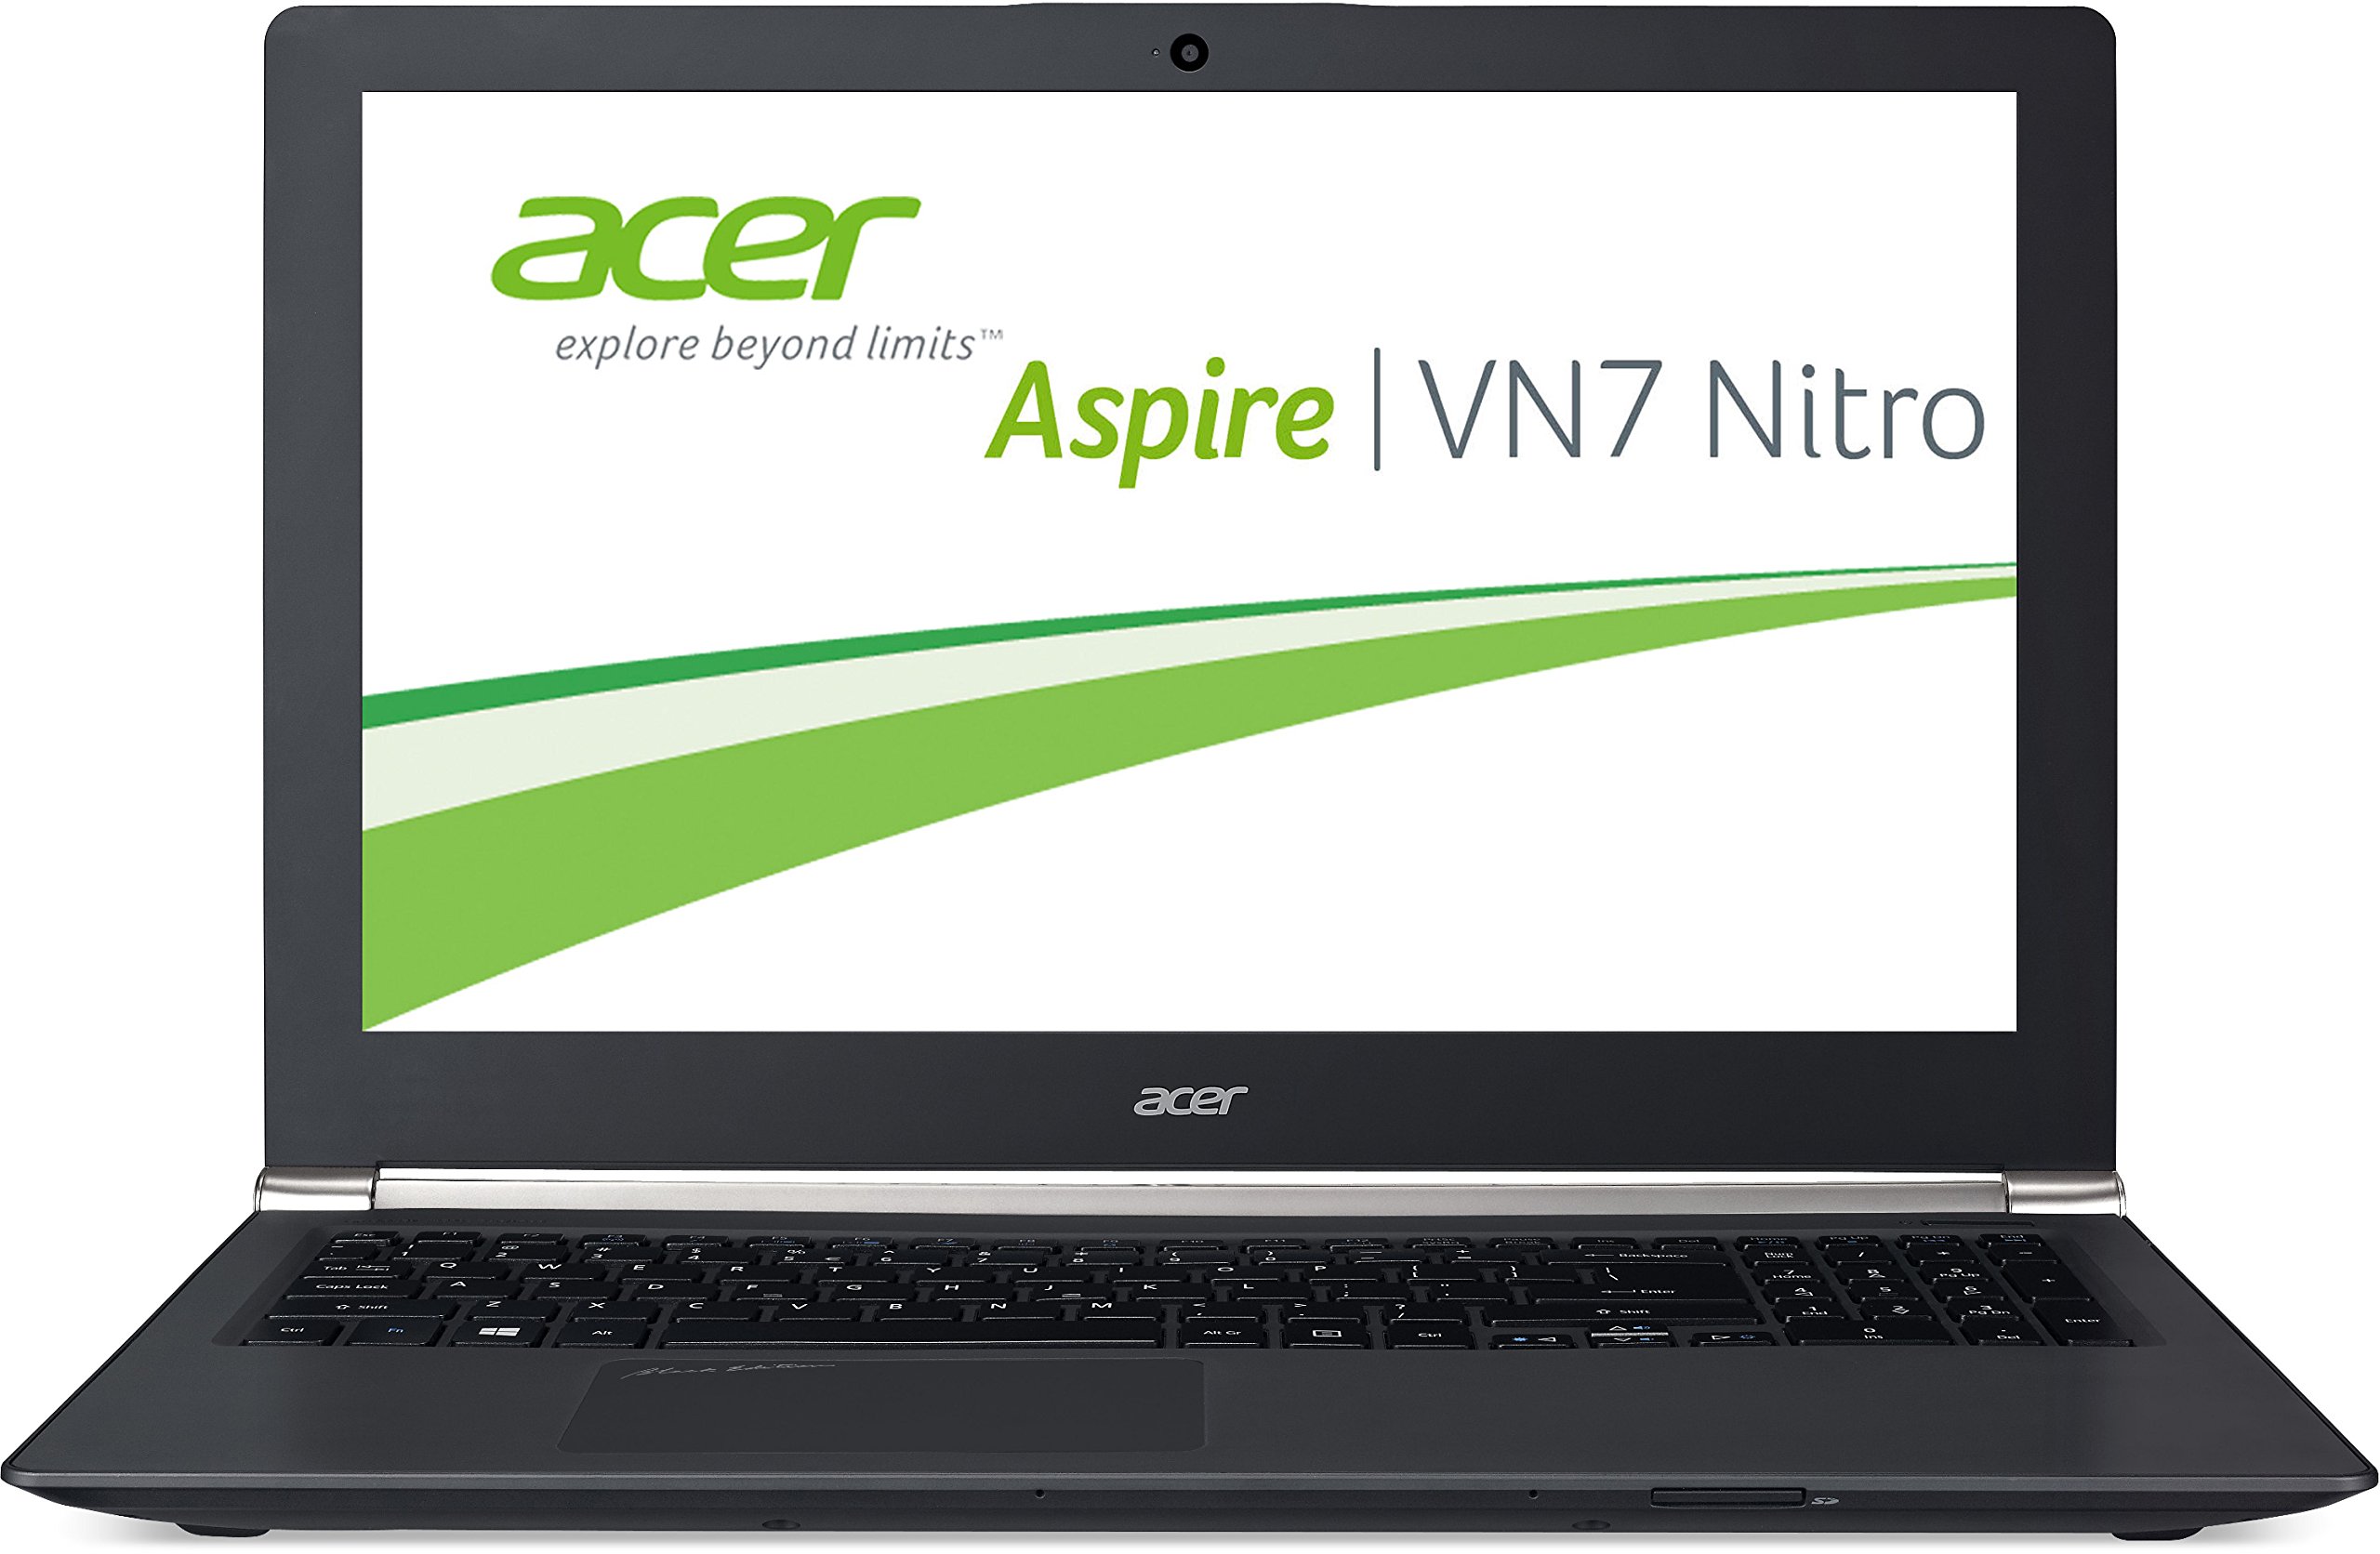 Acer Aspire Nitro VN7-791G Notebook